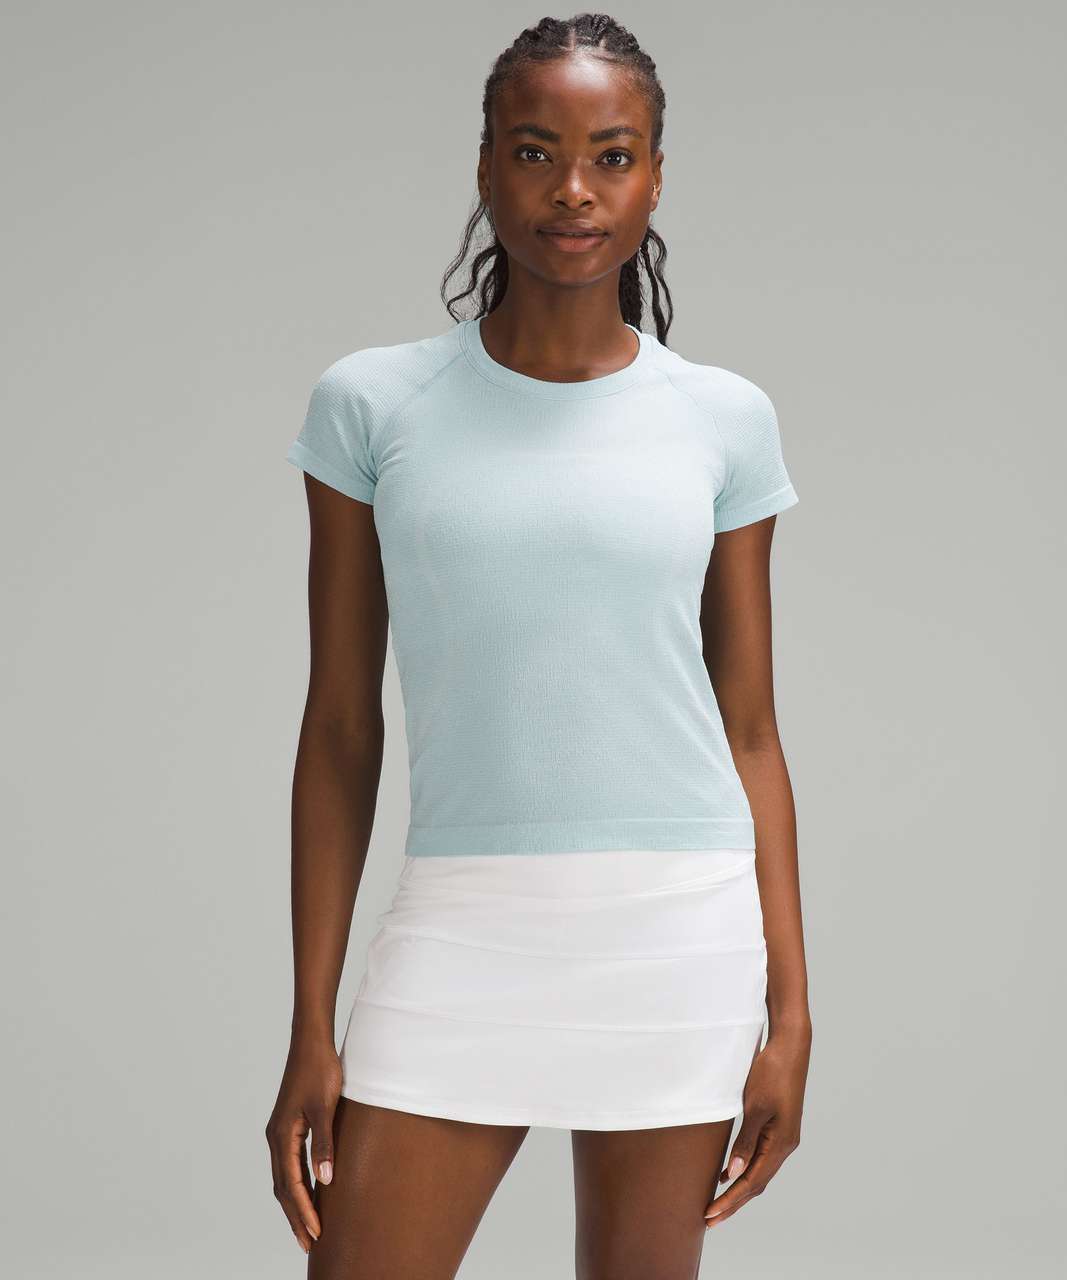 Lululemon Swiftly Tech Short Sleeve Shirt 2.0 *Race Length - Chrome / White  - lulu fanatics